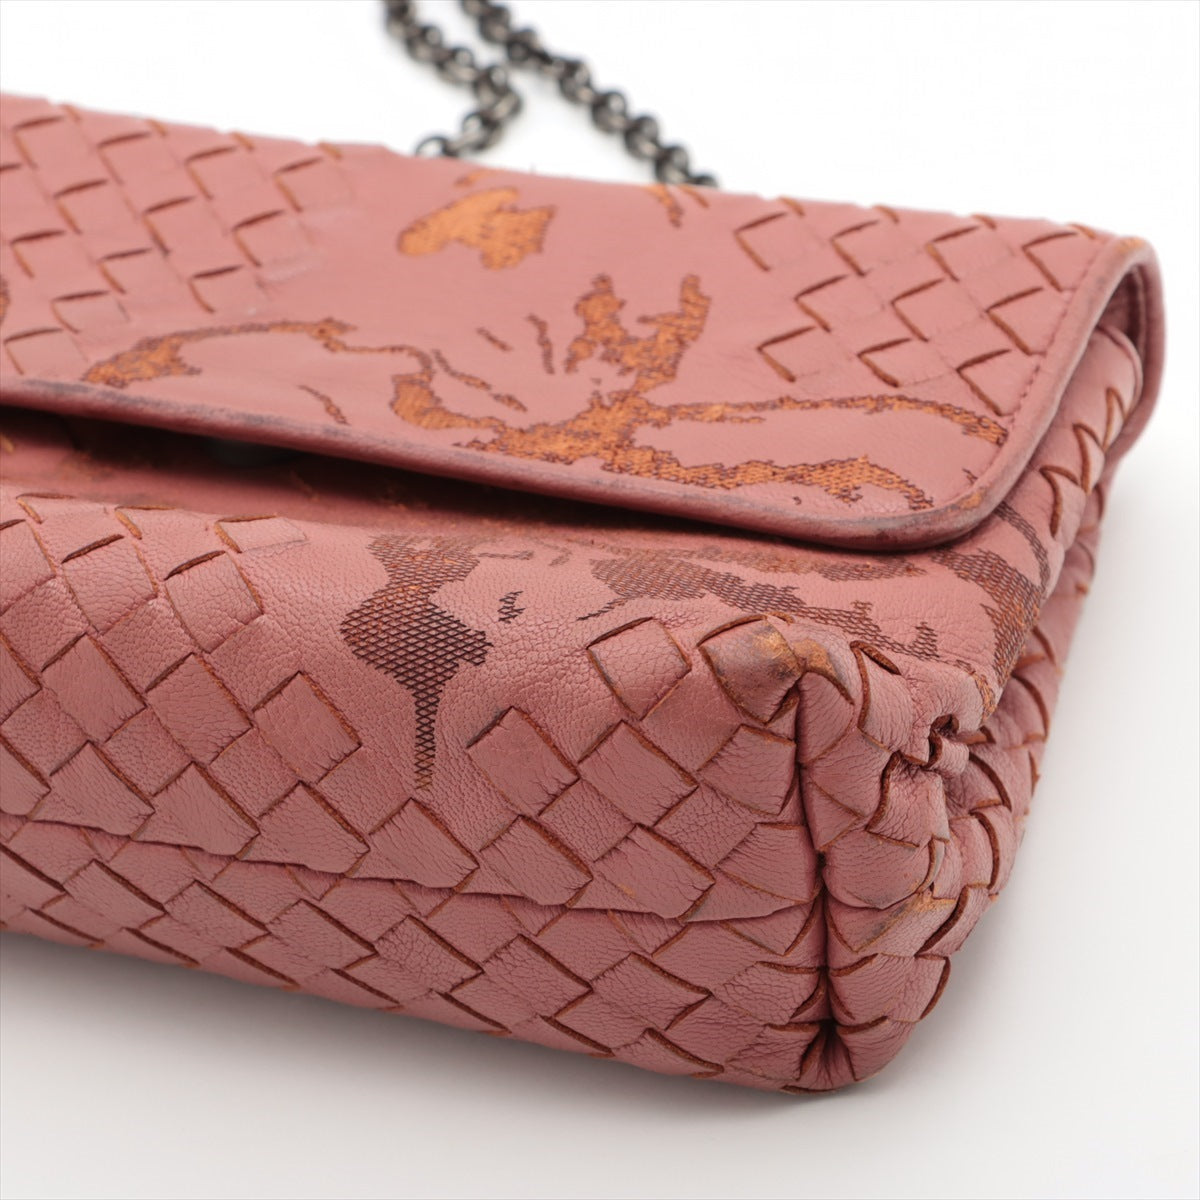 Bottega Veneta Intrecciato Leather Chain shoulder bag Pink With mirror